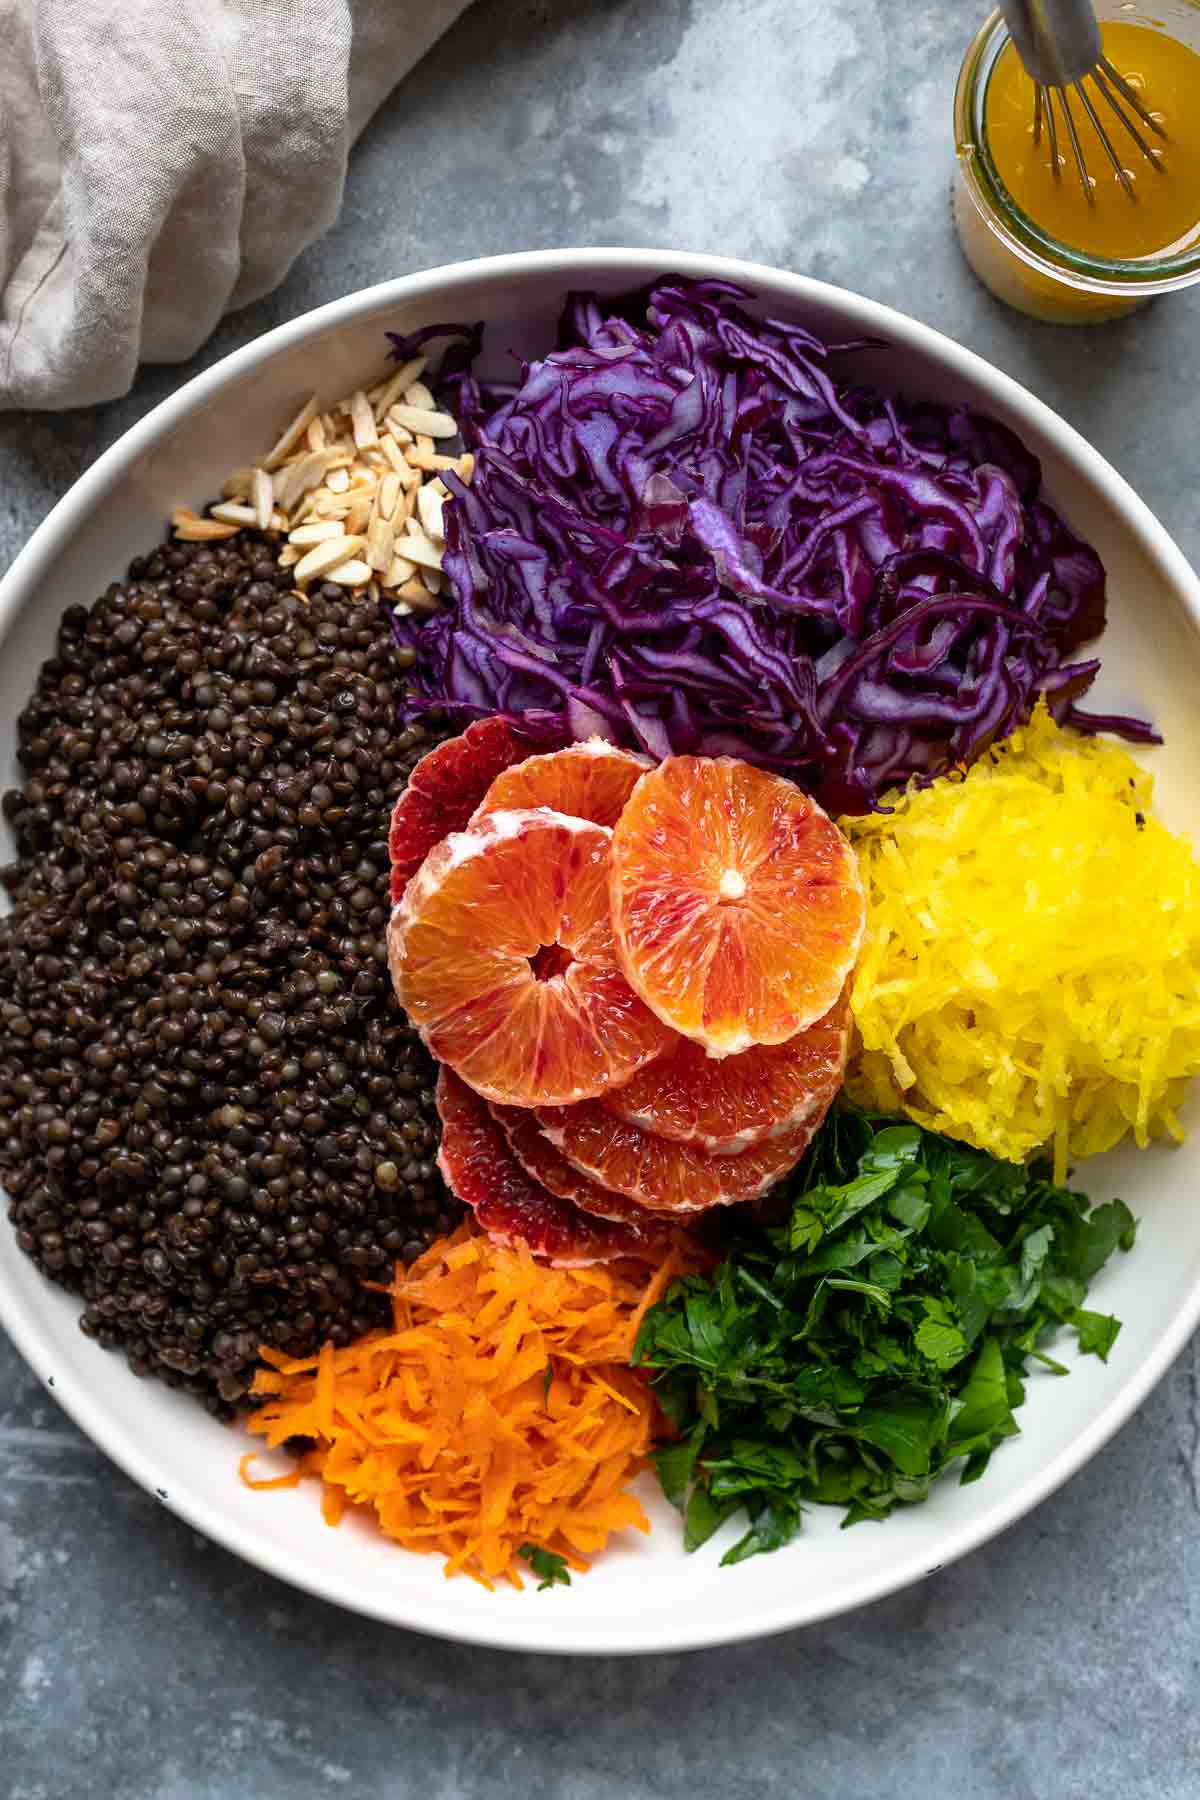 Beluga lentil salad ingredients